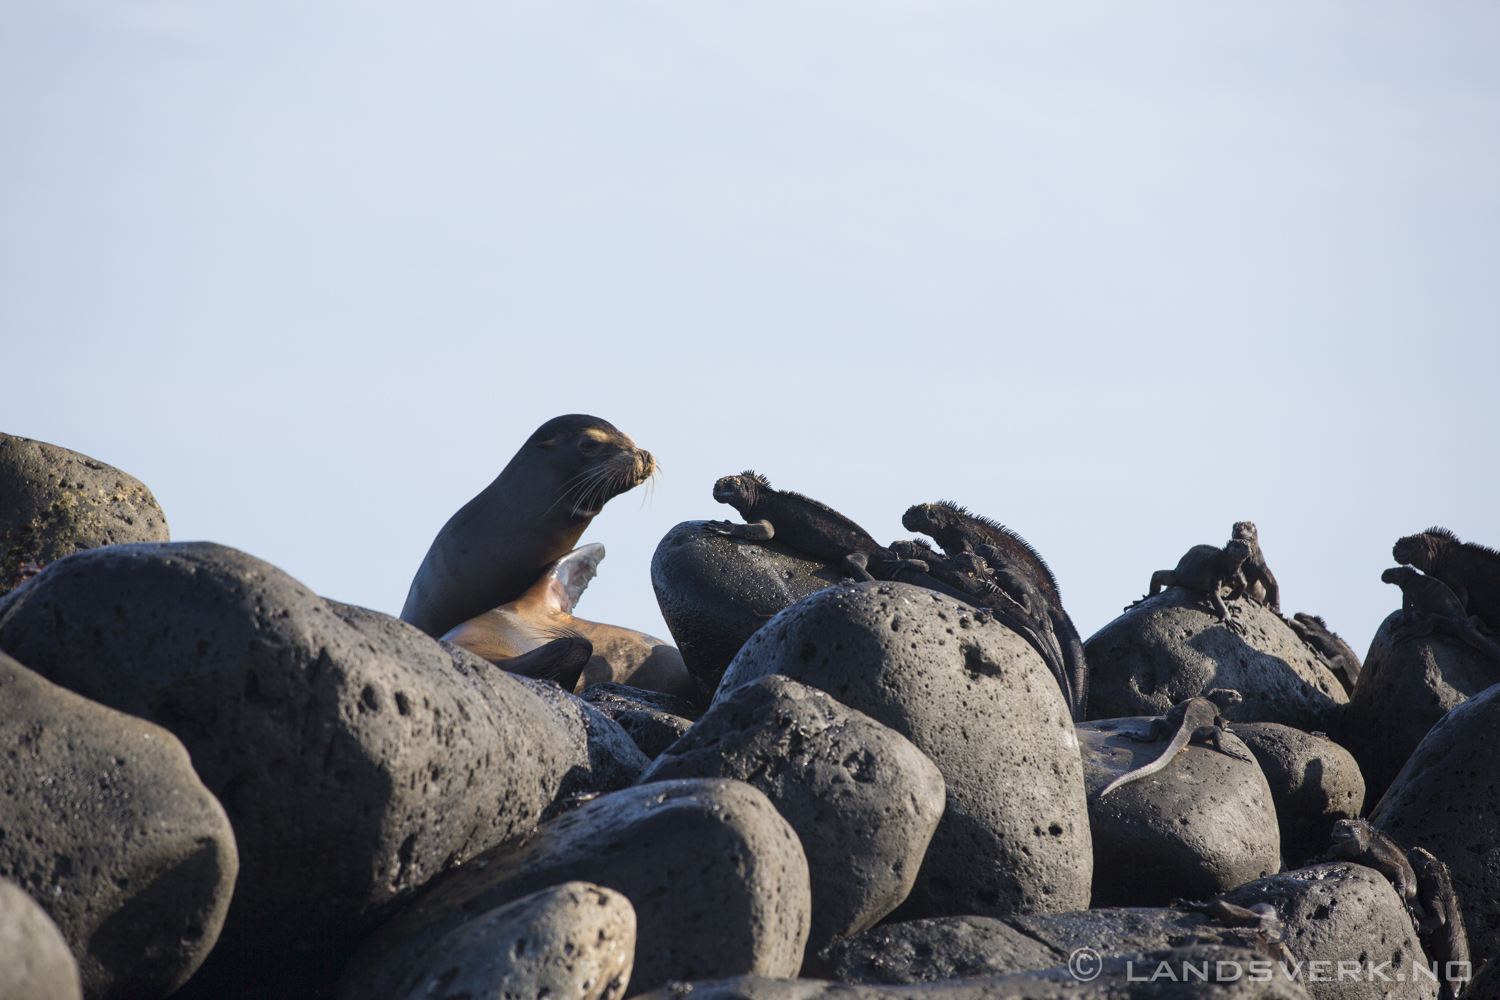 Wild Sea Lion and some Iguanas, Isla Lobos, San Cristobal, Galapagos. 

(Canon EOS 5D Mark III / Canon EF 70-200mm f/2.8 L IS II USM)